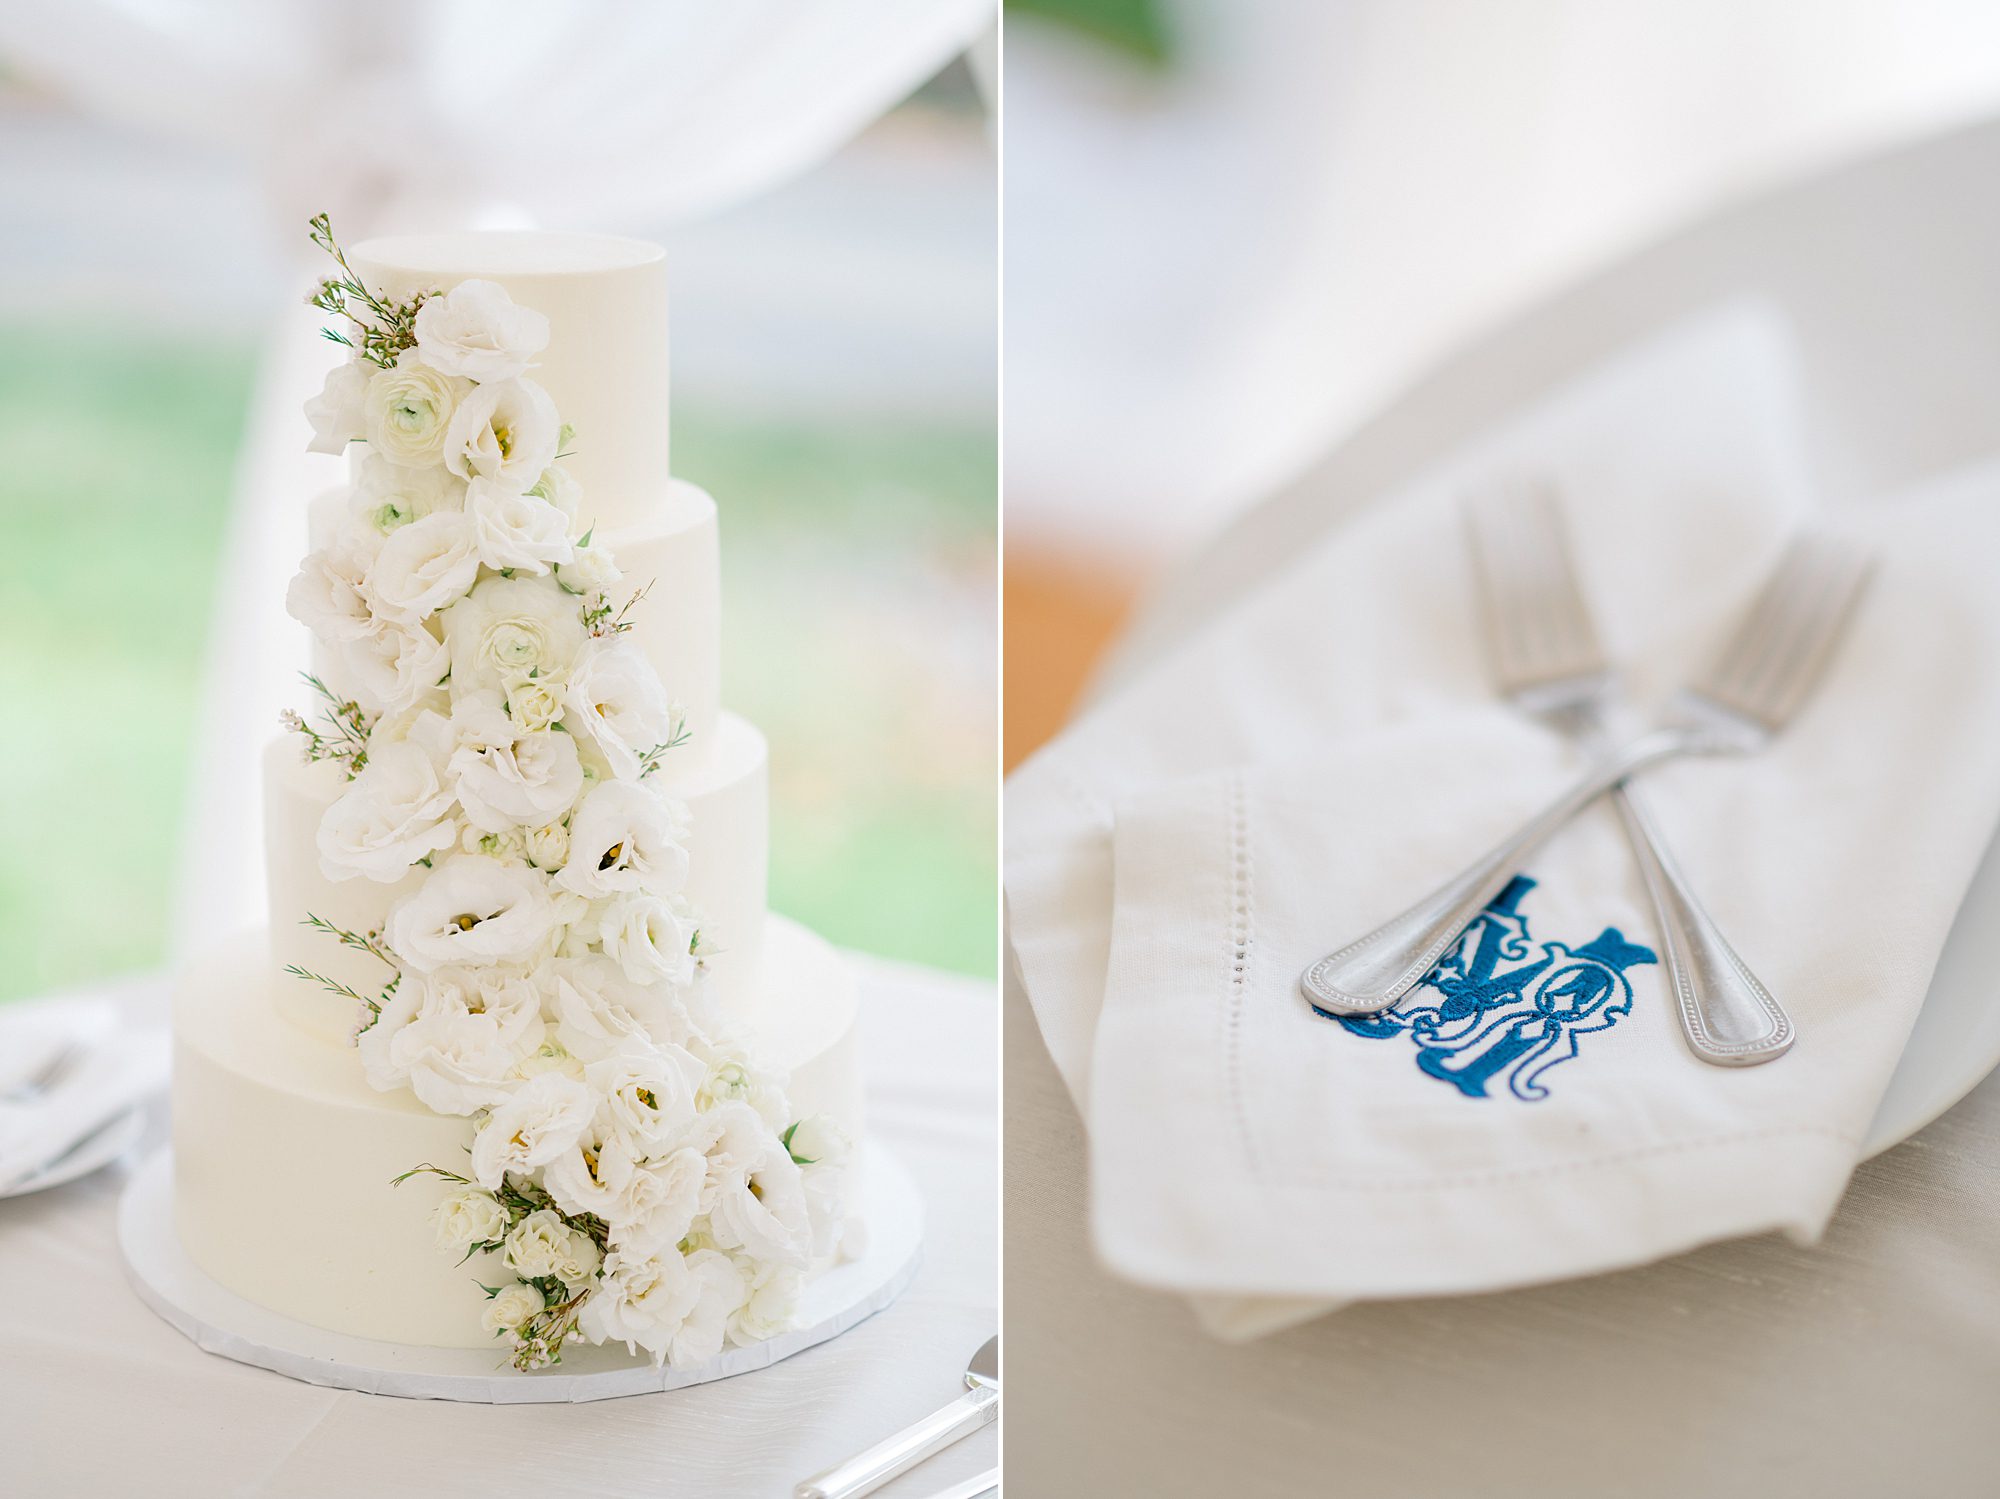 wedding cake and napkin from Cross Gables Estate wedding